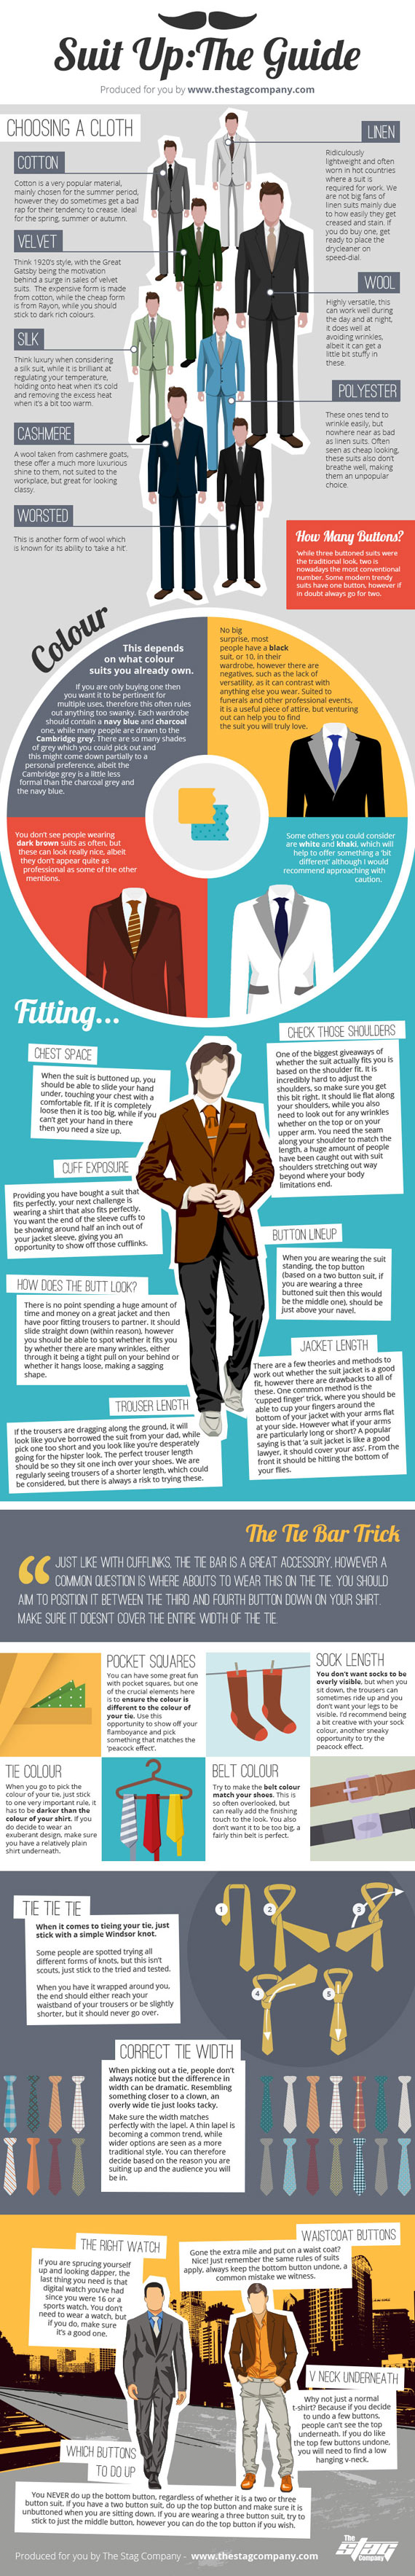 suit guide for men